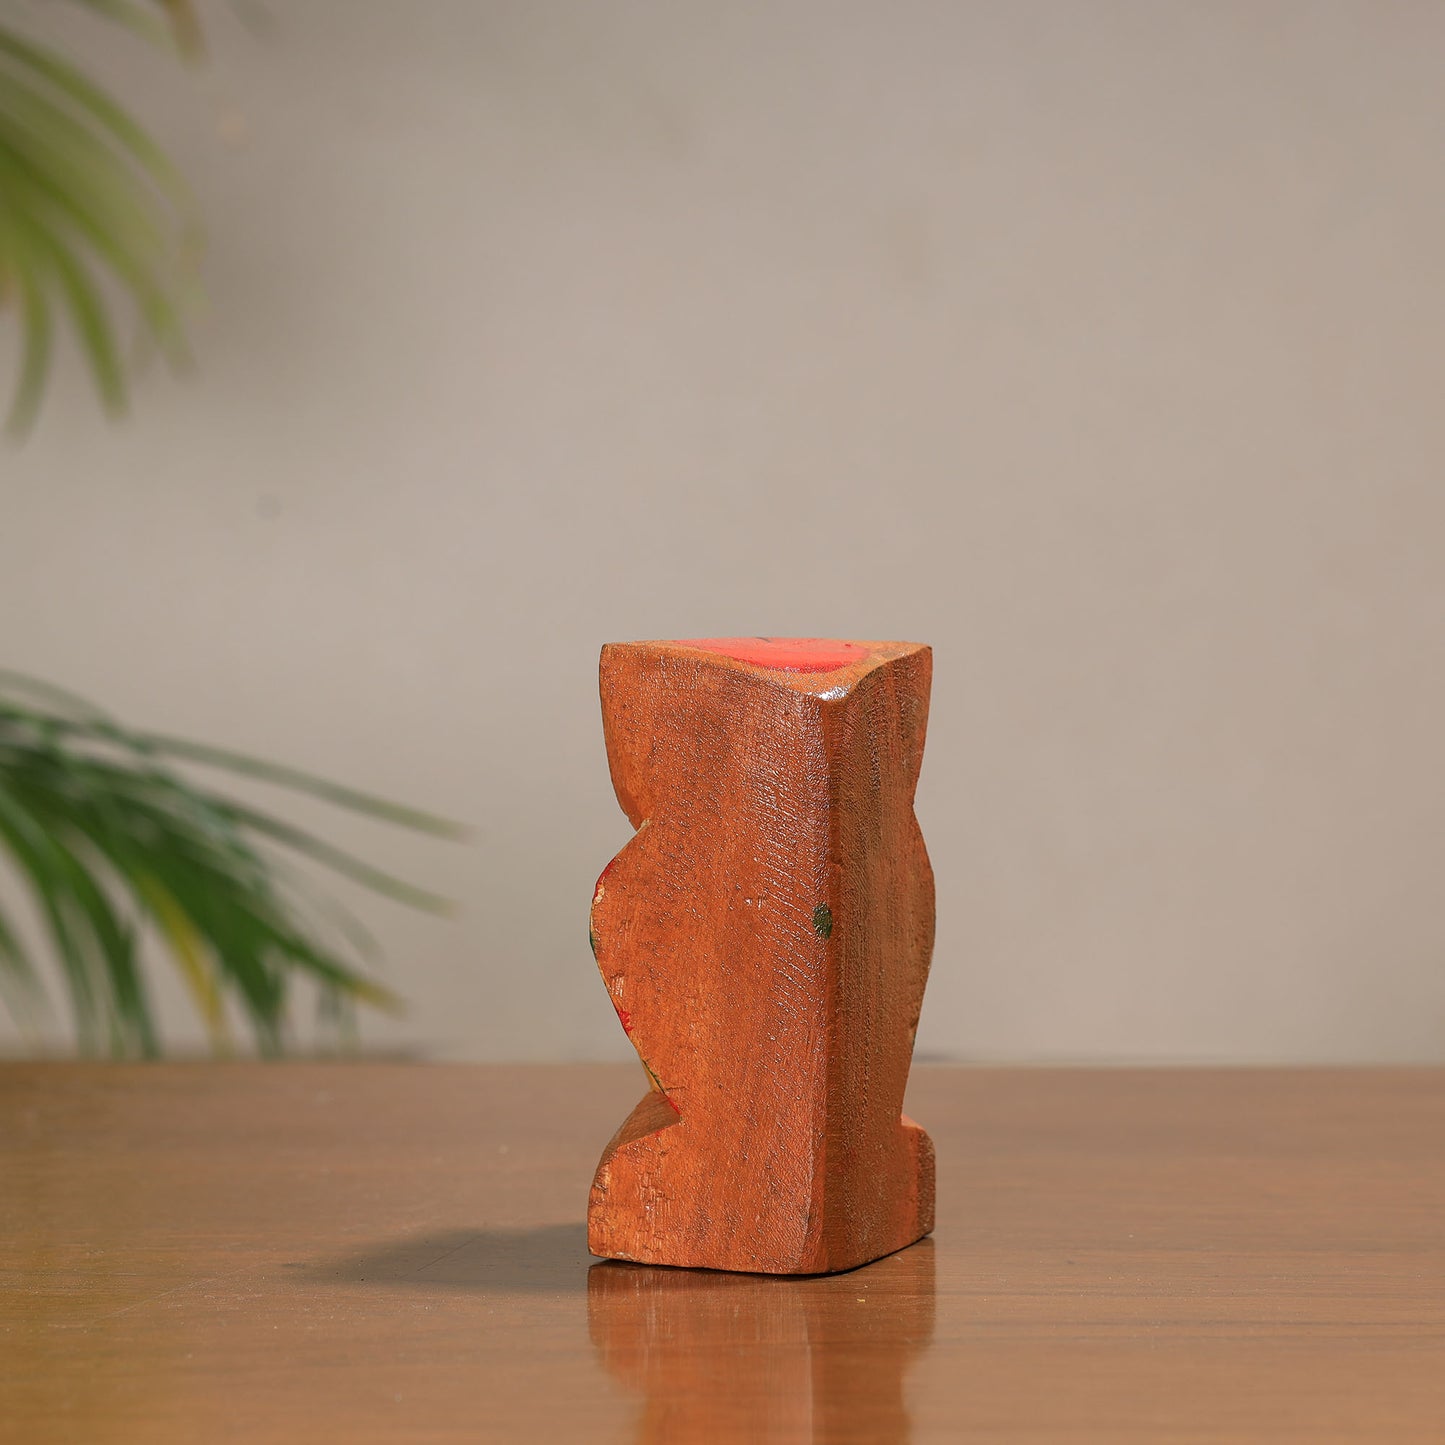 Owl - Traditional Burdwan Wood Craft Handpainted Sculpture (Small) 11